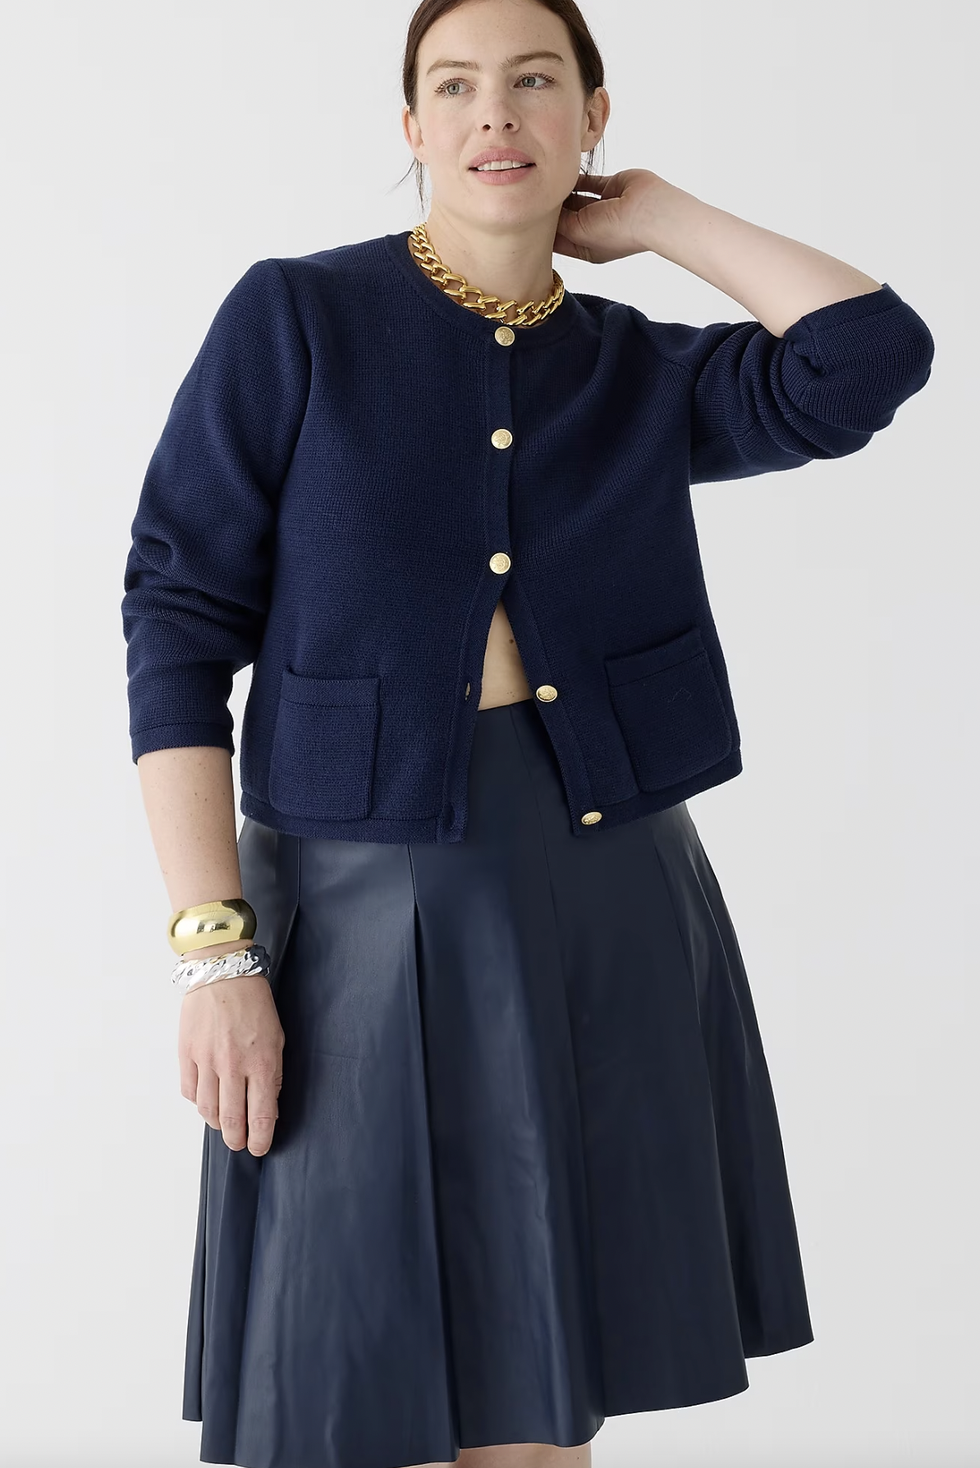 Emilie Sweater Lady Jacket with Contrast Trim